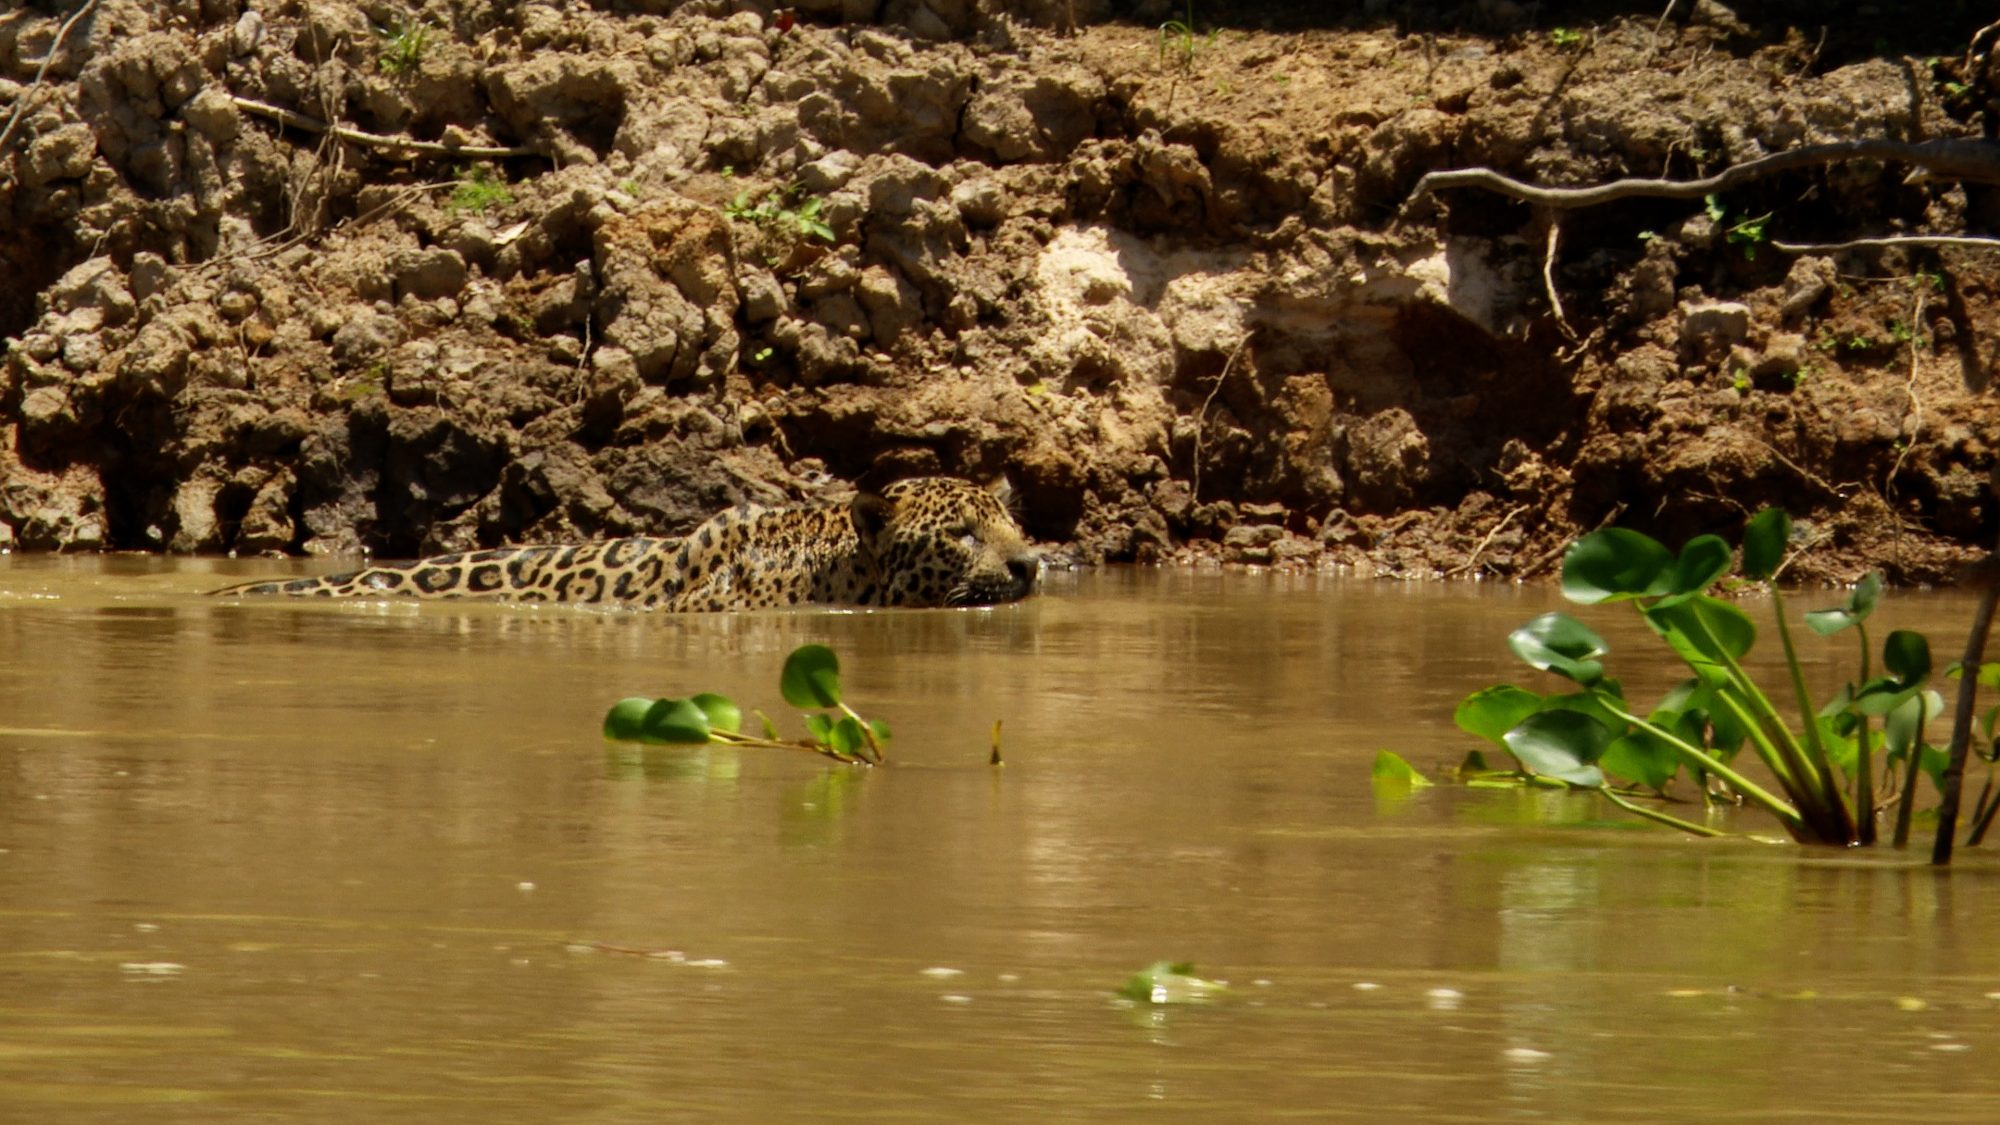 A magnificent male Jaguar prowling the river bank – Pantanal, Brazil 2019